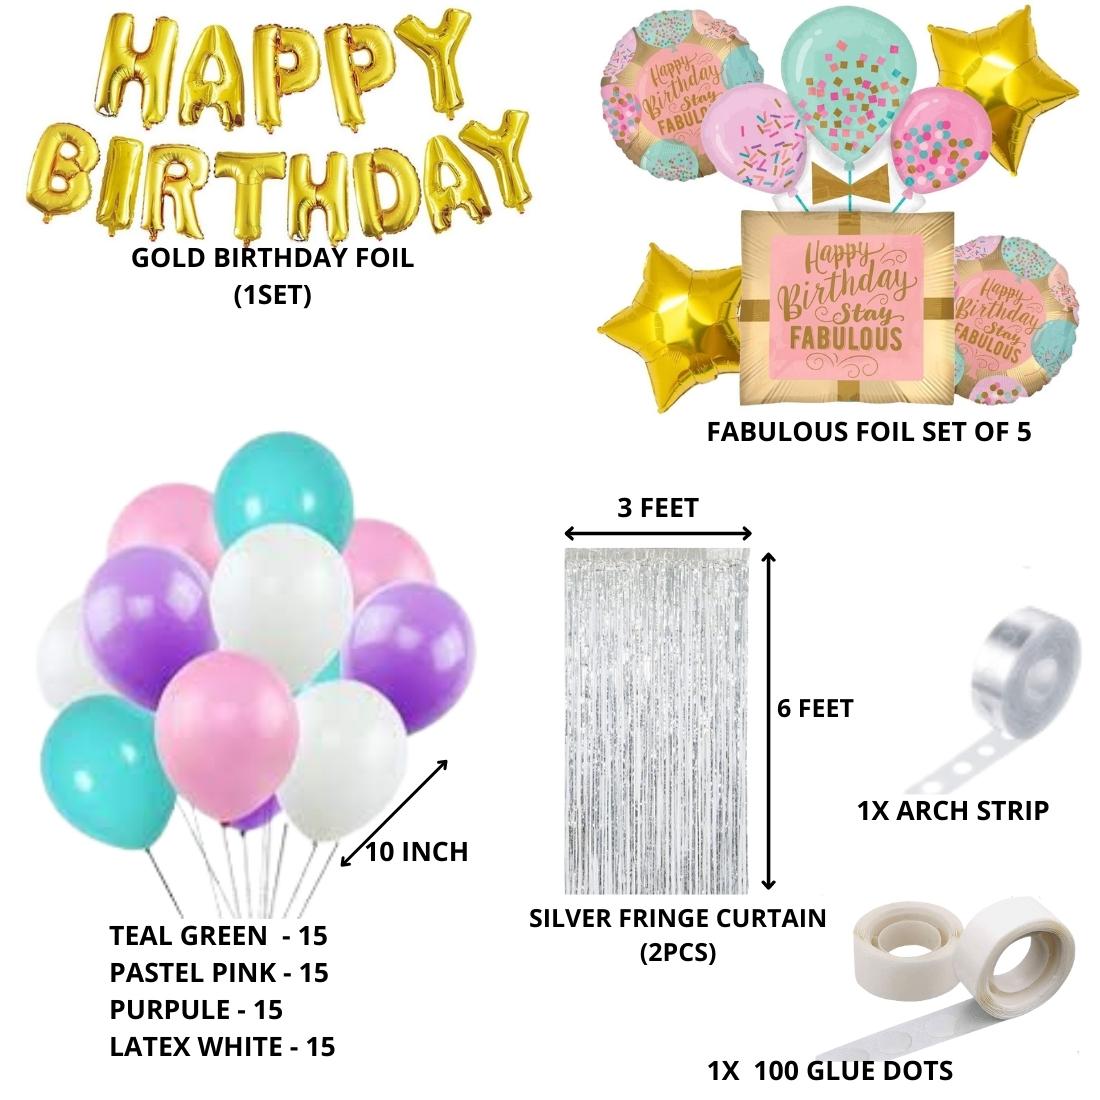 Stay Fabulous Birthday Decoration Kit W Fringe Curtain(82 Pieces)